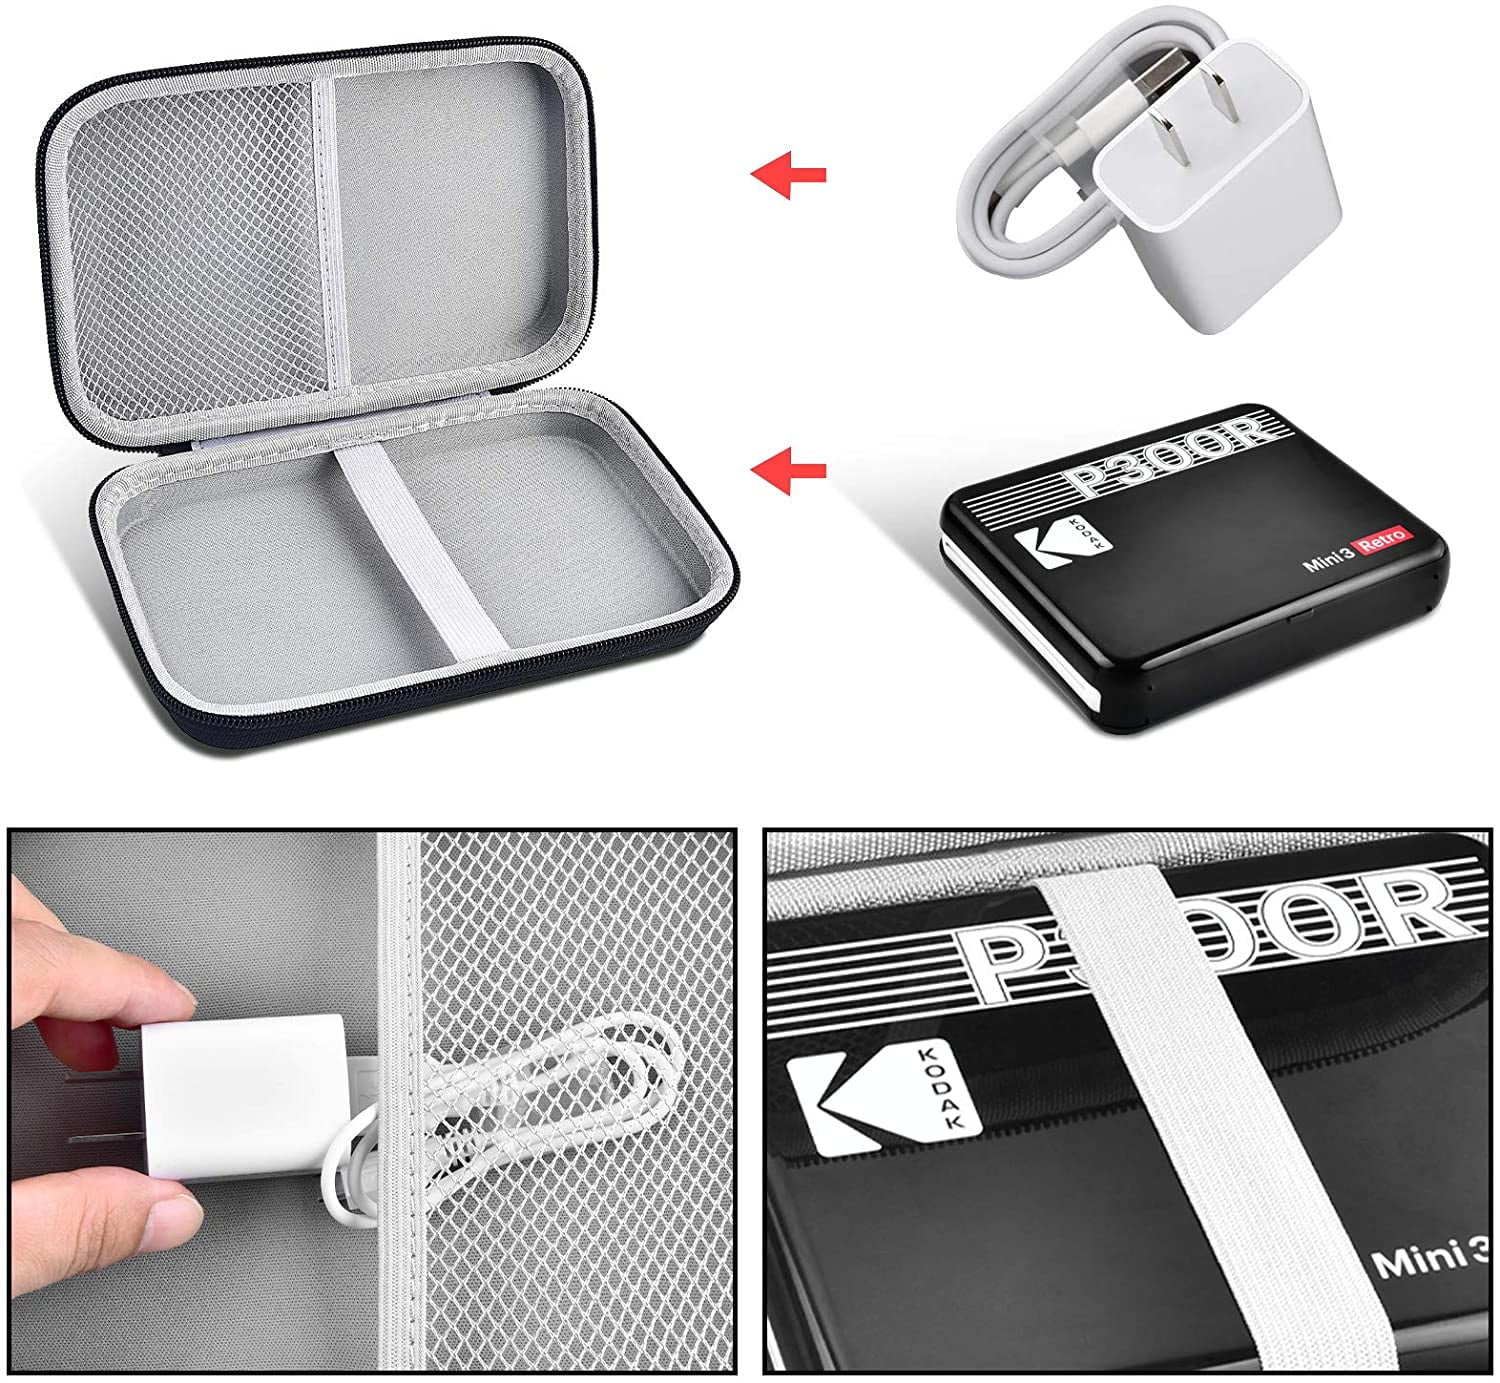  Aproca Hard Storage Travel Case, for KODAK Mini Shot 3 Retro  2-in-1 Portable Wireless Instant Camera & Photo Printer : Electronics